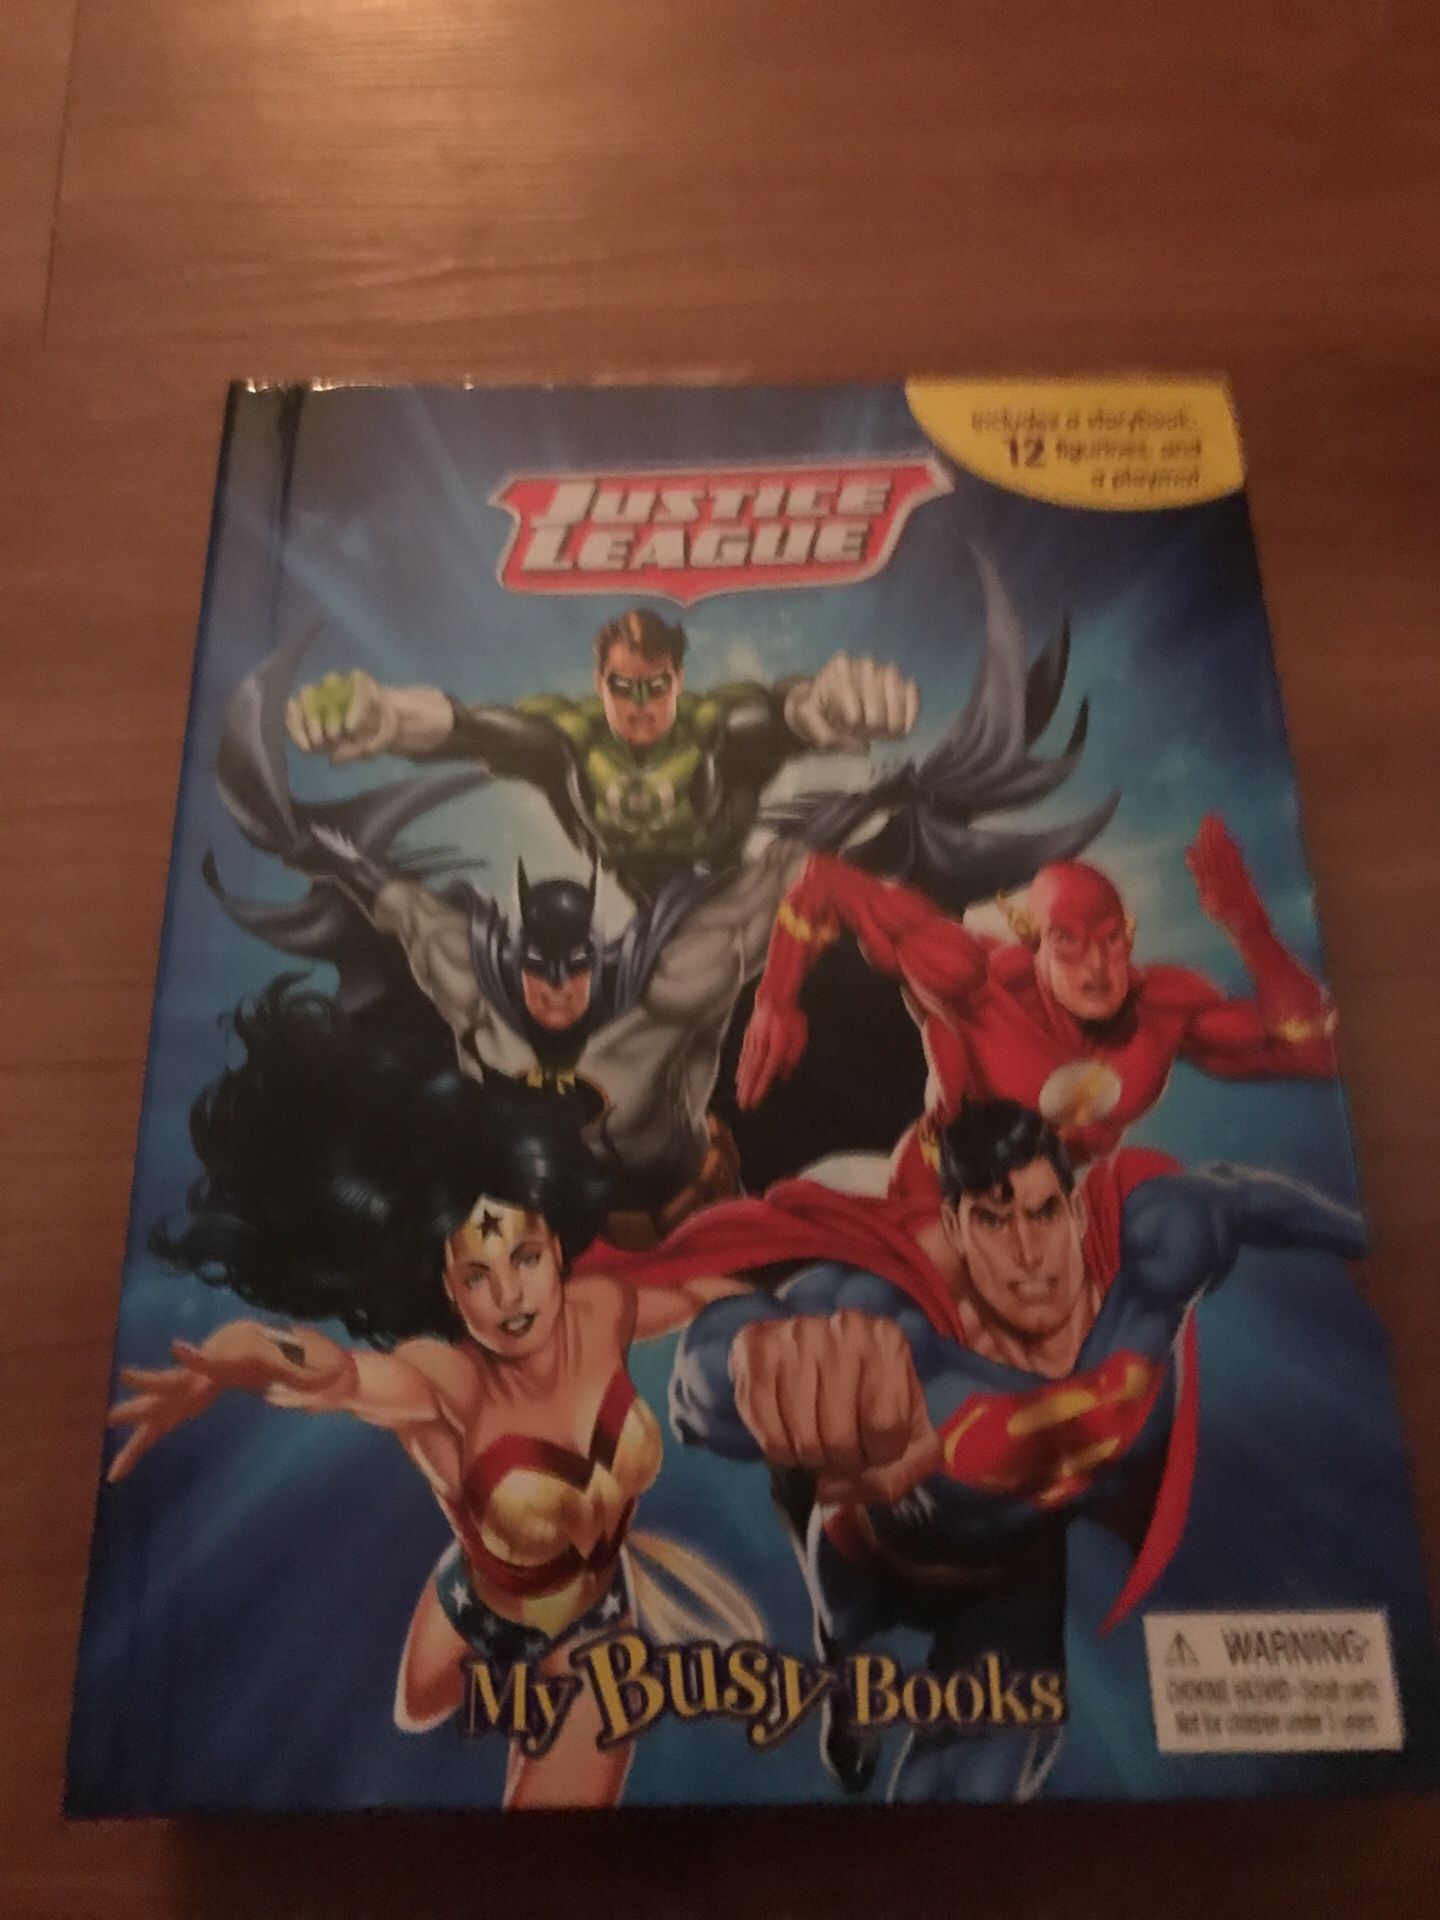 Super hero book